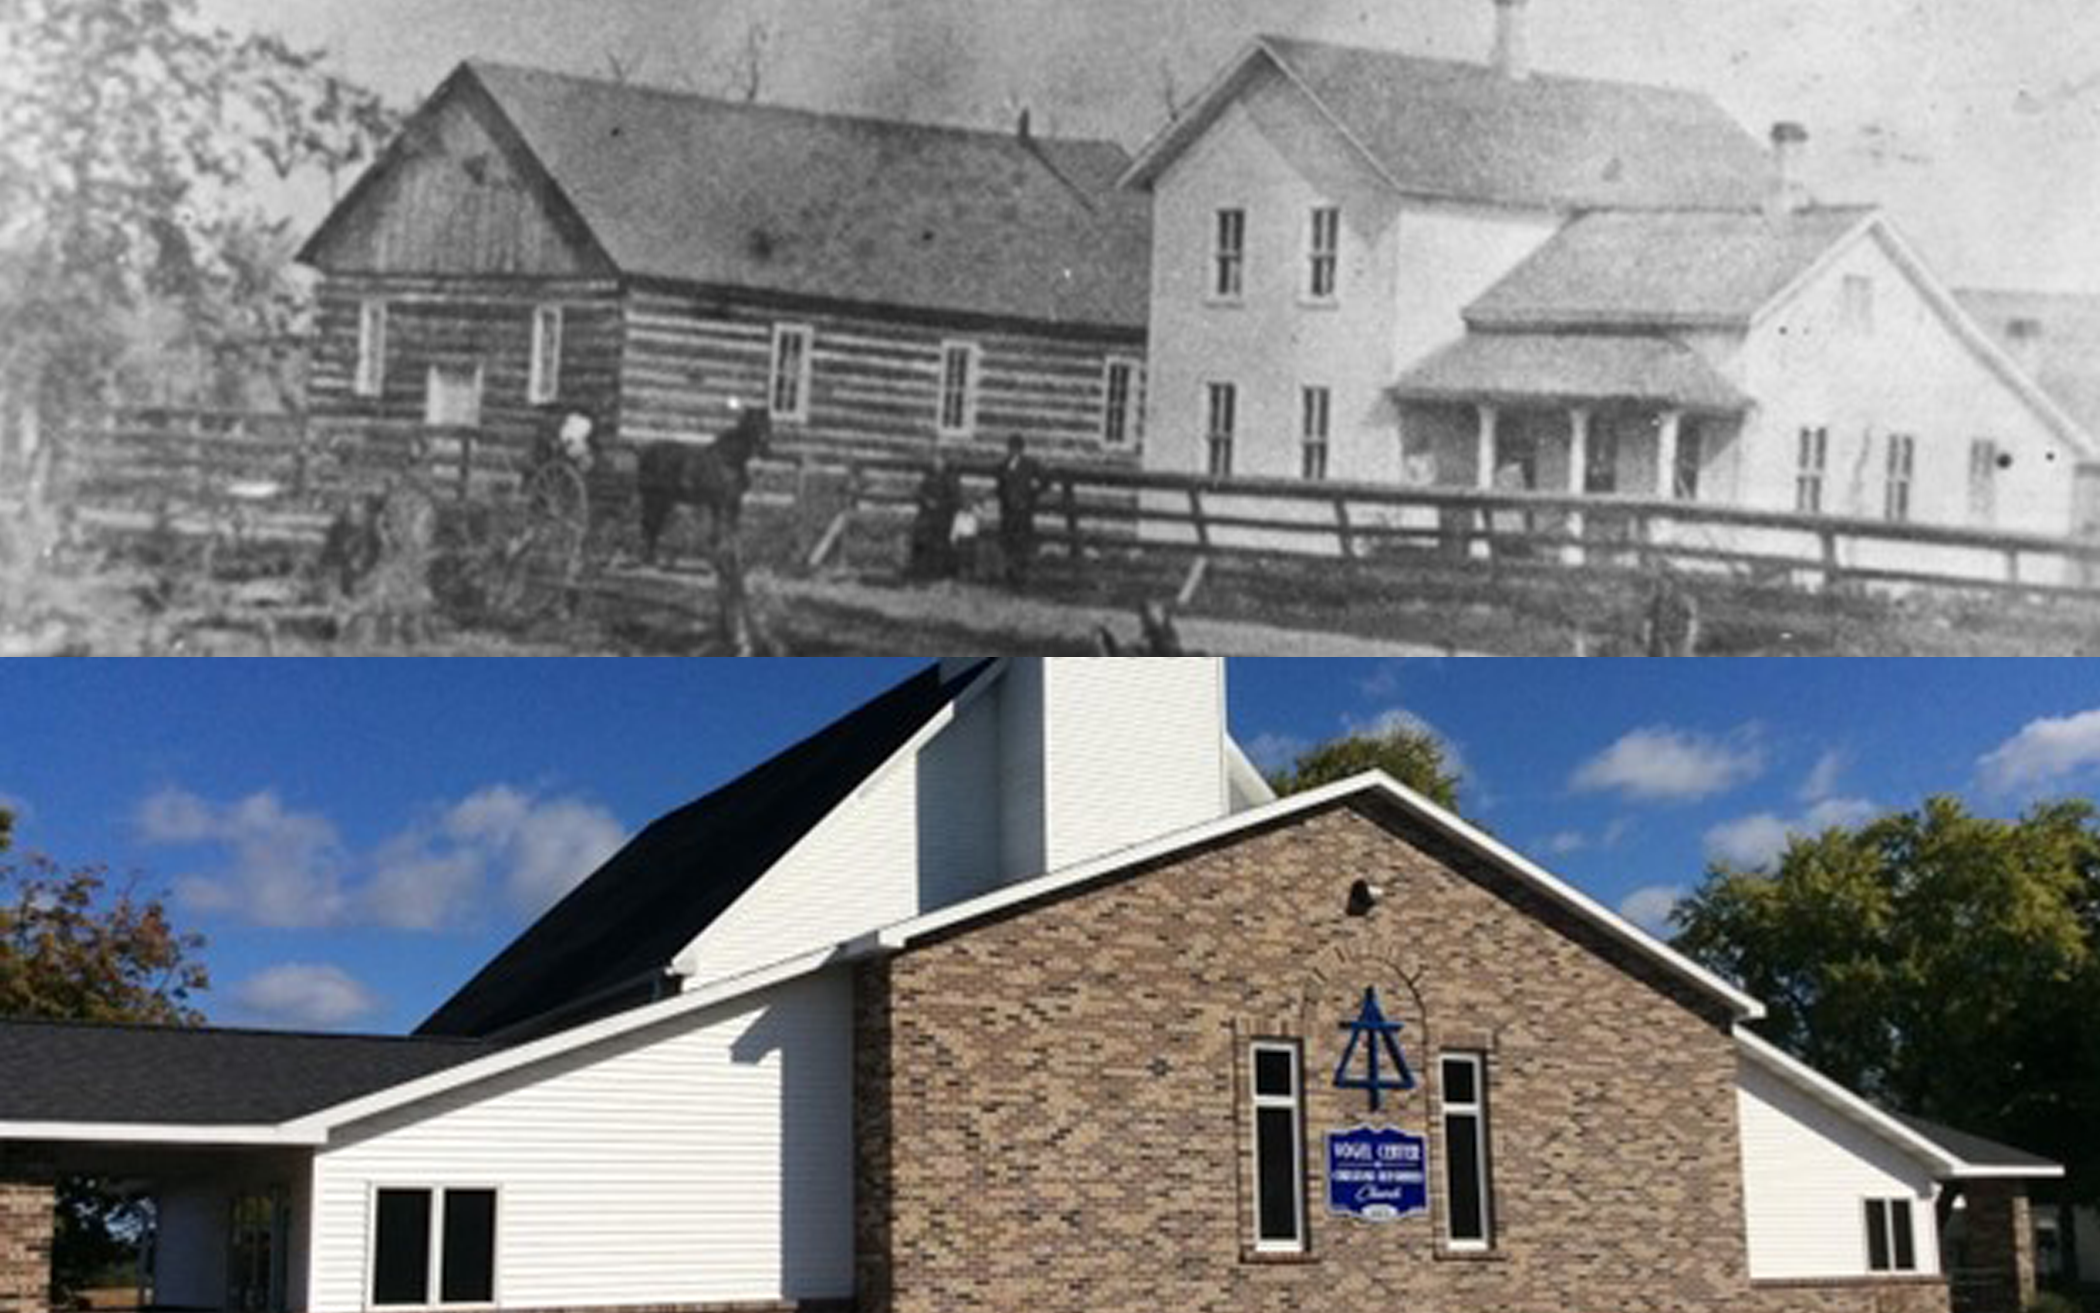 North-central Michigan Church Celebrates 150 Years